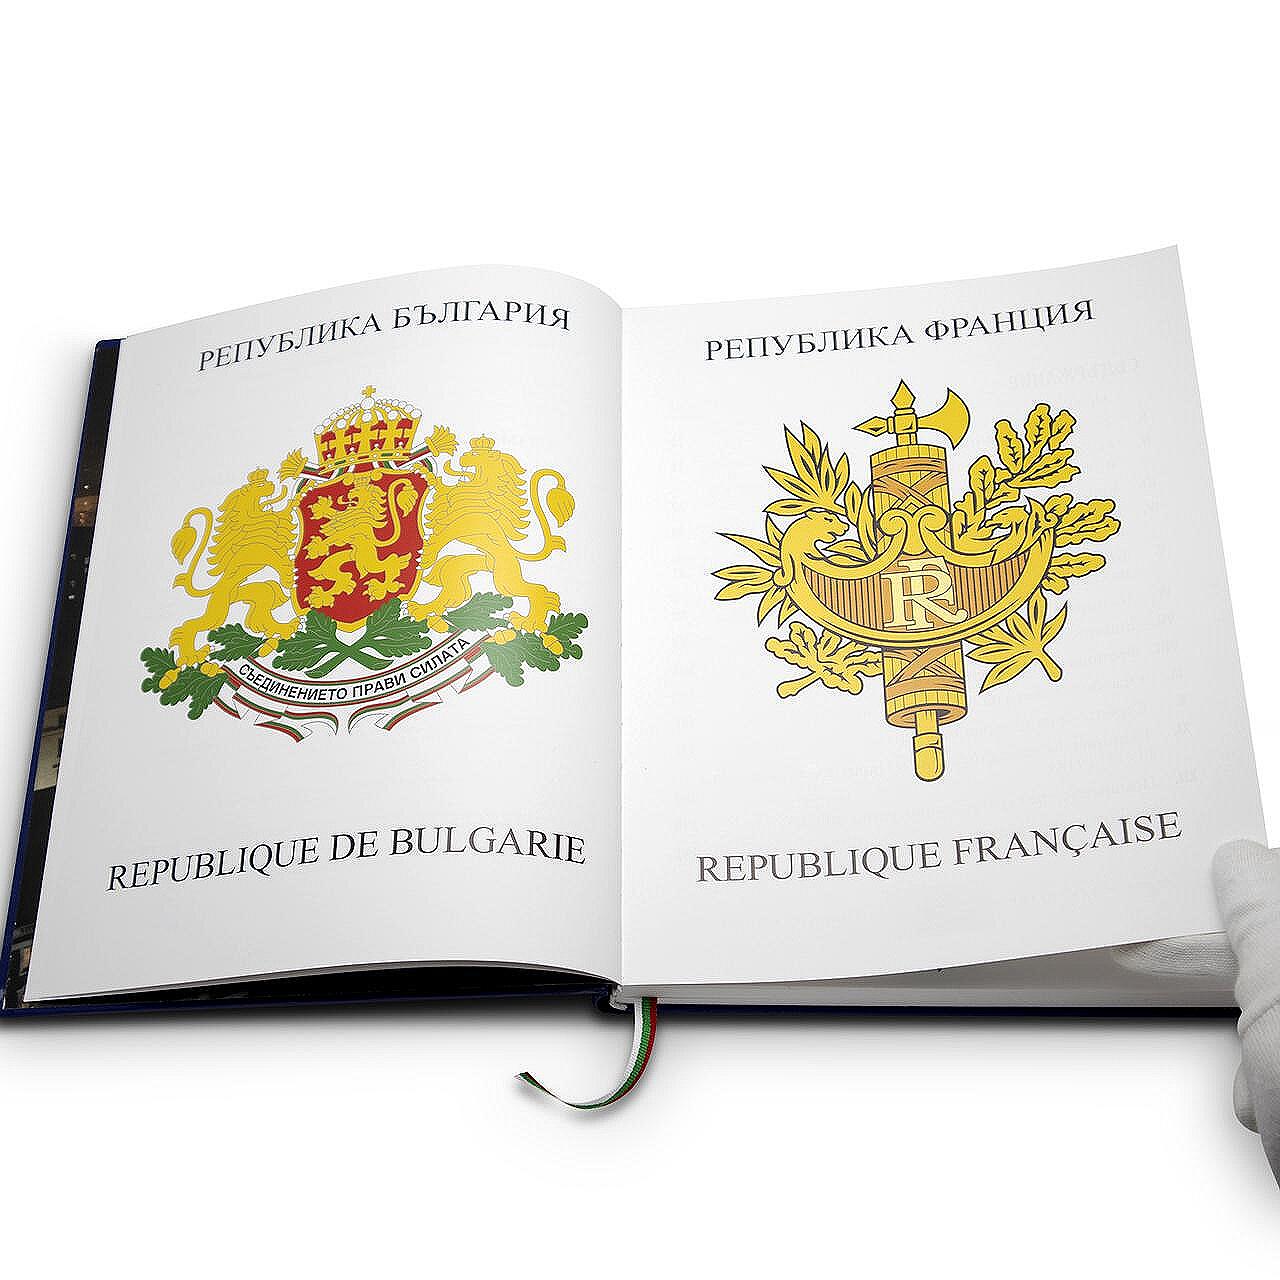 Книгата „Българите и французите | Les Bulgares et les Français“